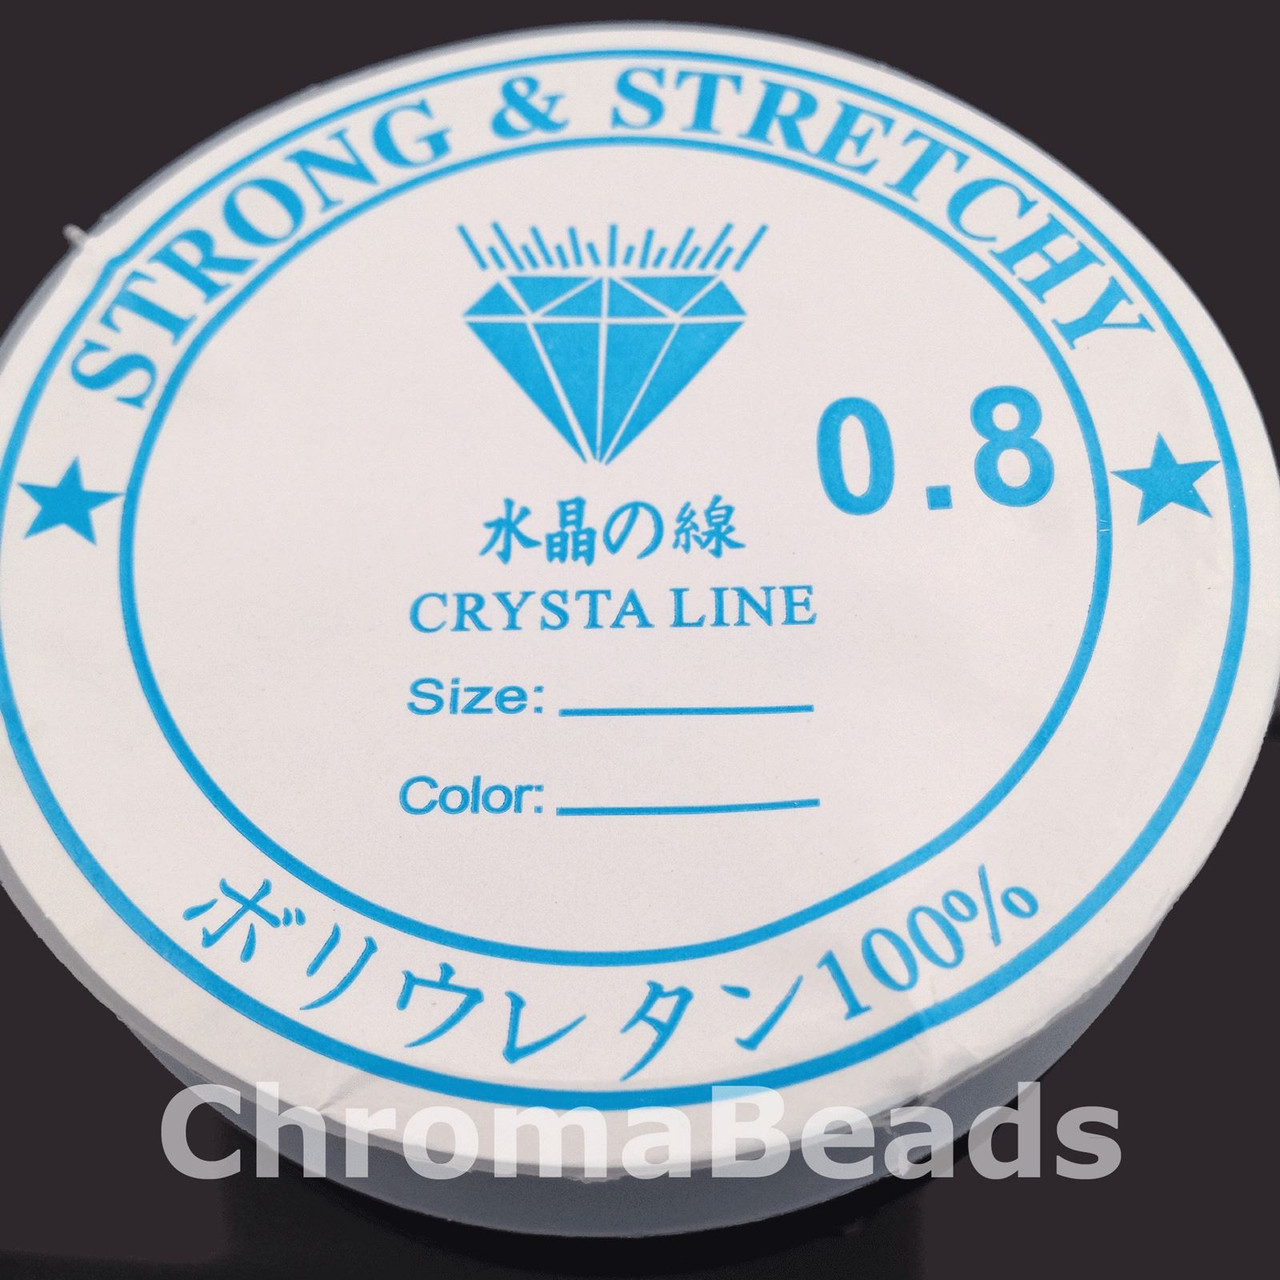 0.8mm Strong & Stretchy crystal elastic thread, 5m roll - clear